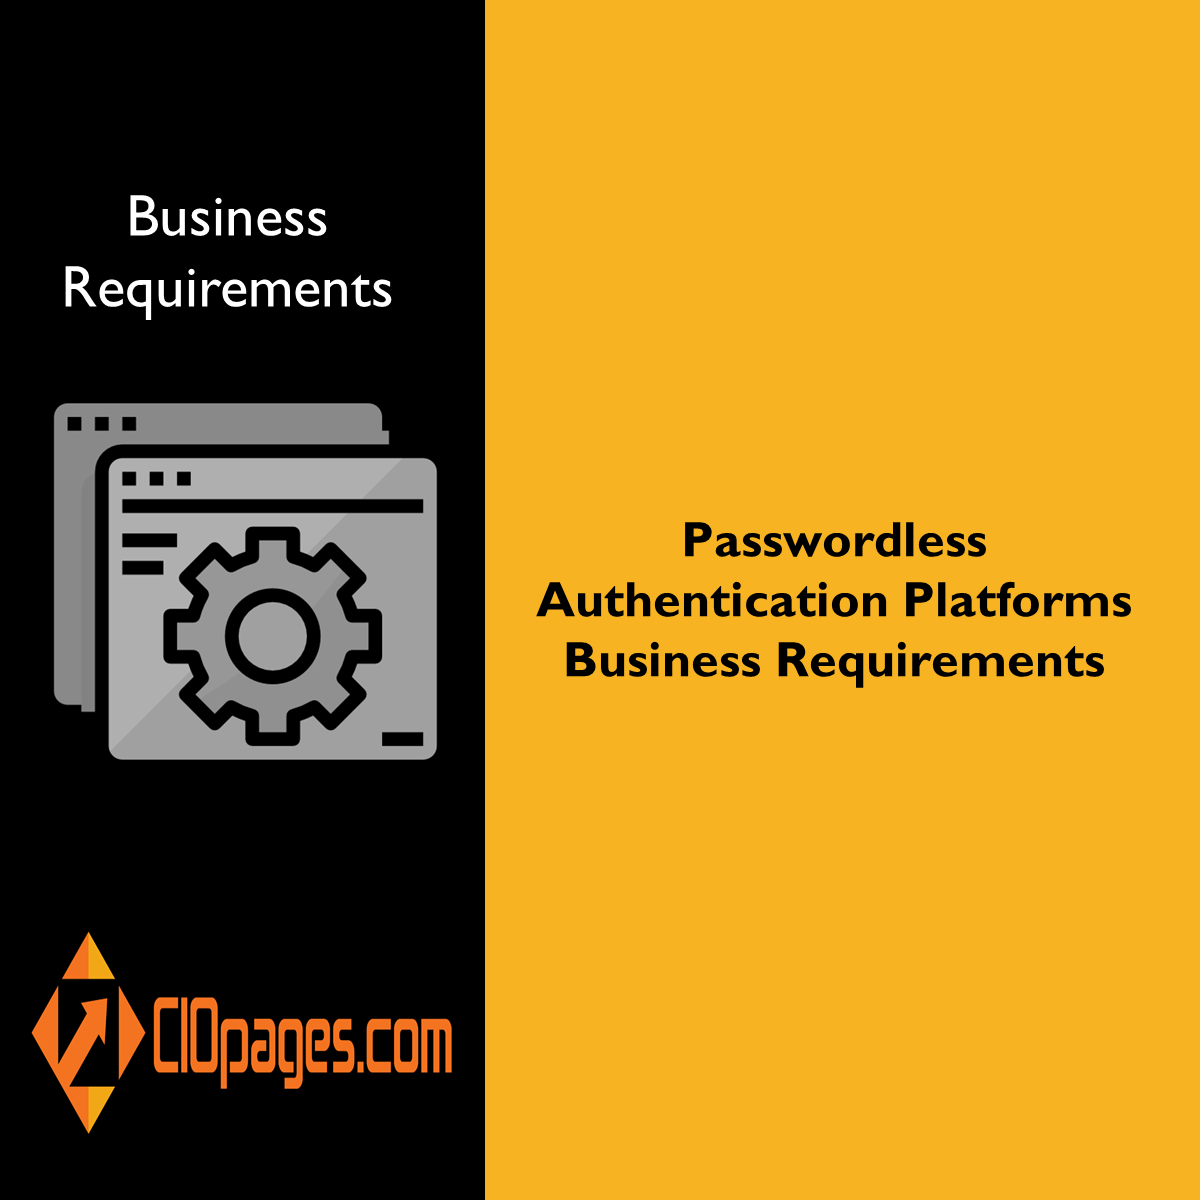 Passwordless Authentication Platforms Business Requirements